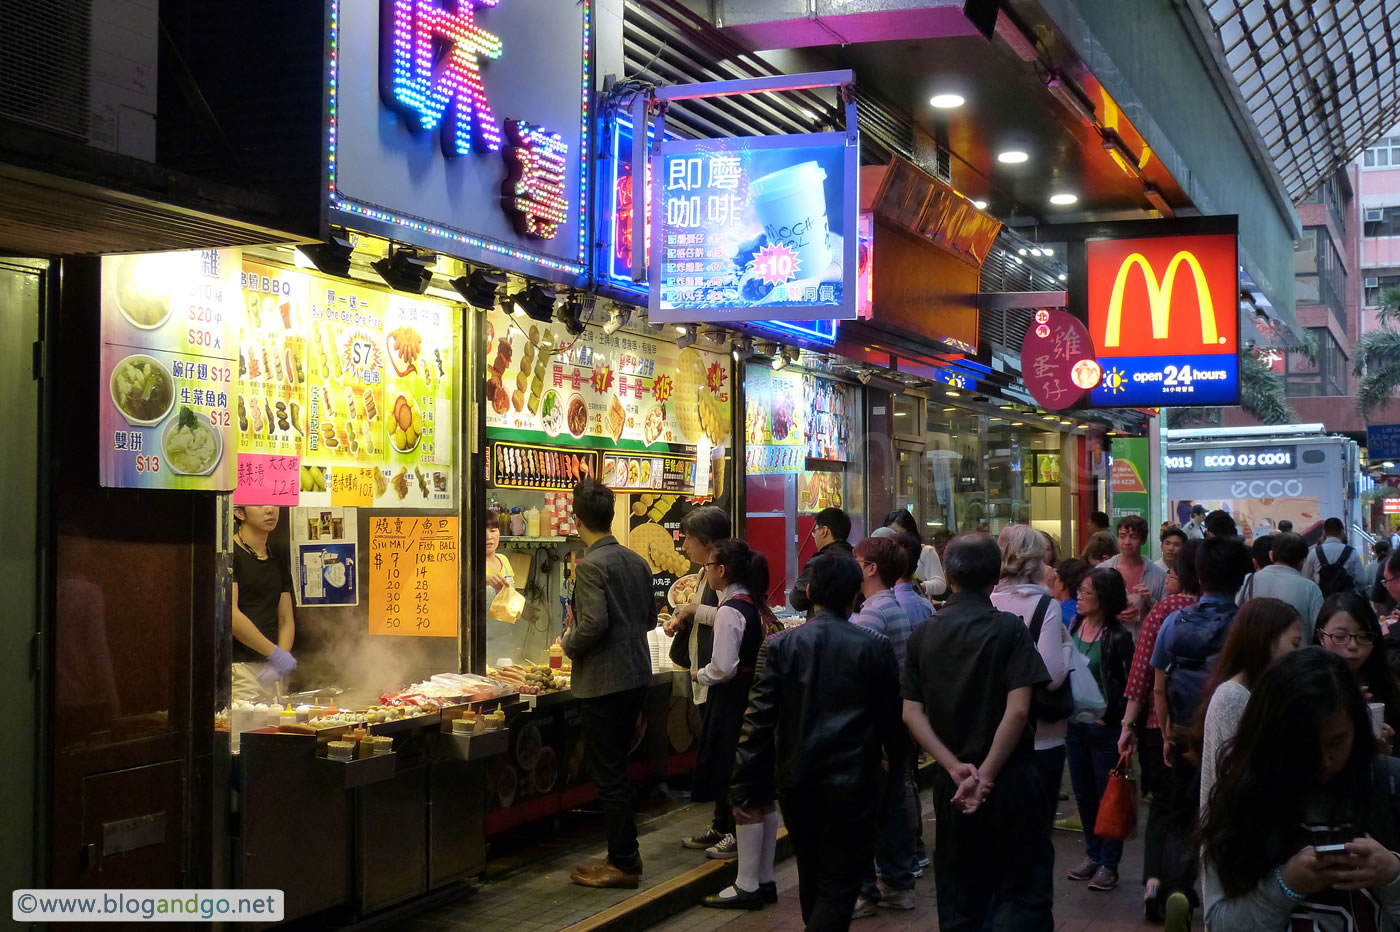 Hong Kong Street Snacks (18 Mar, 2015)